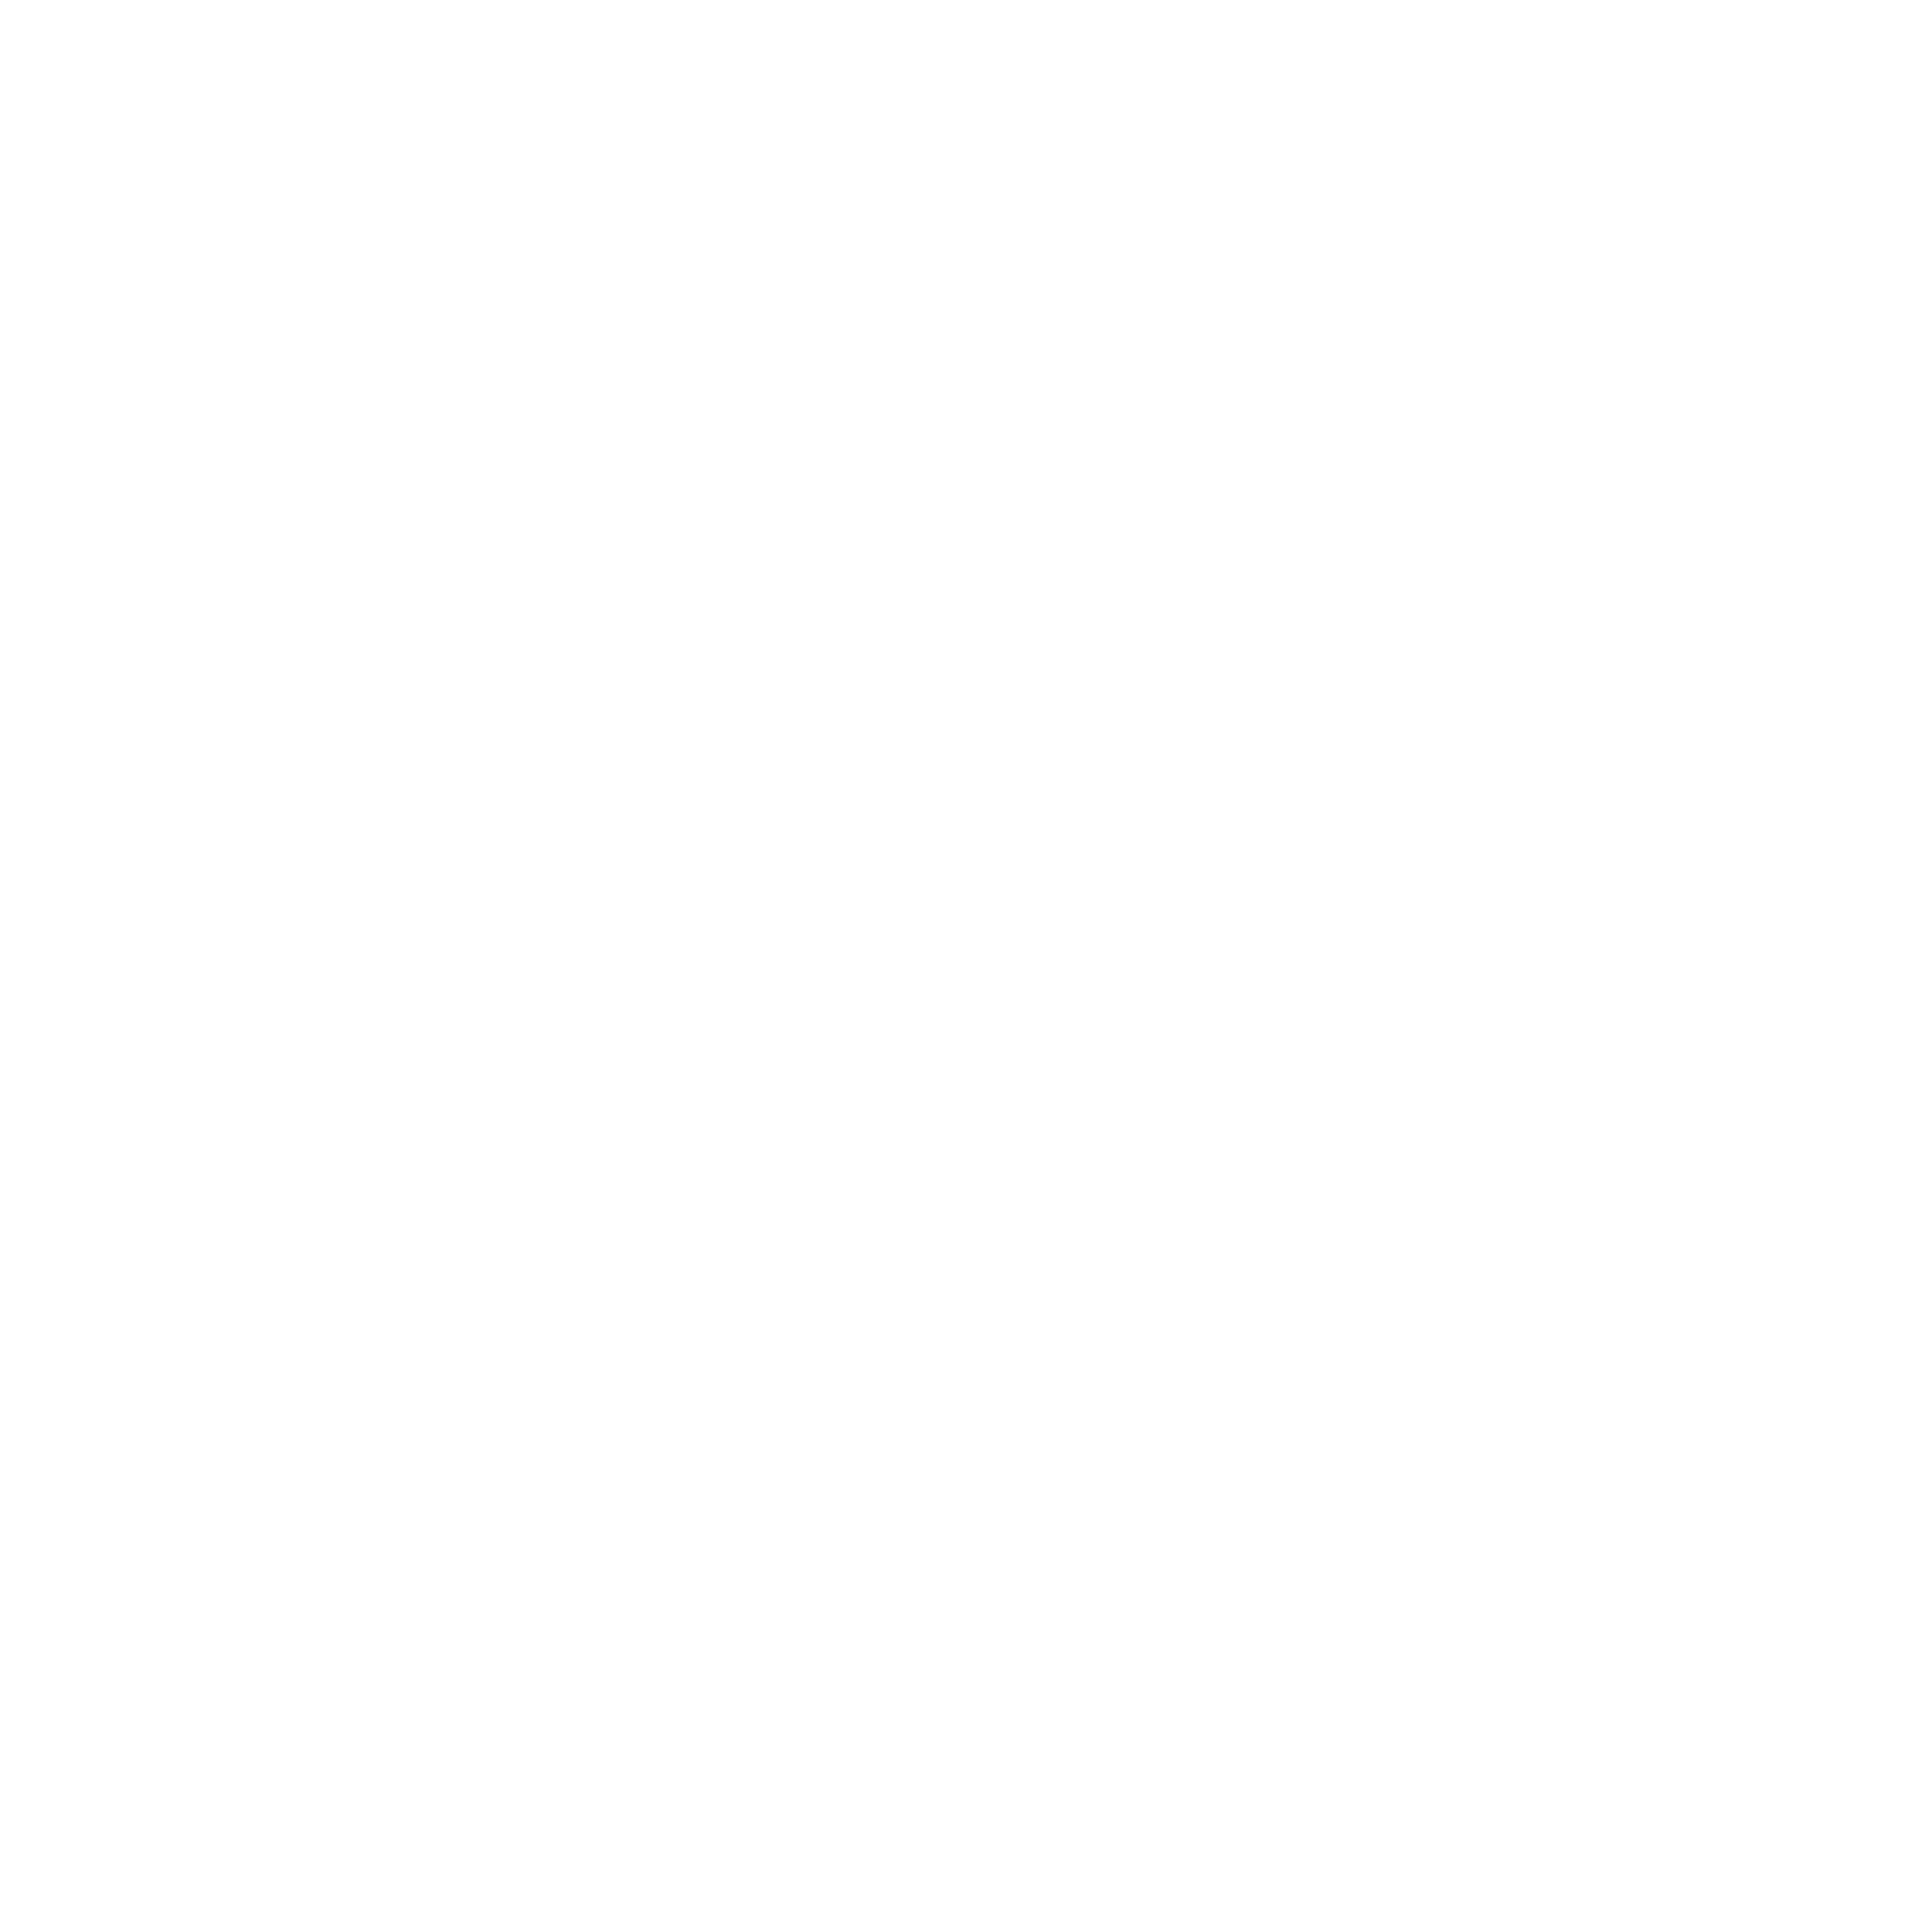 YLE